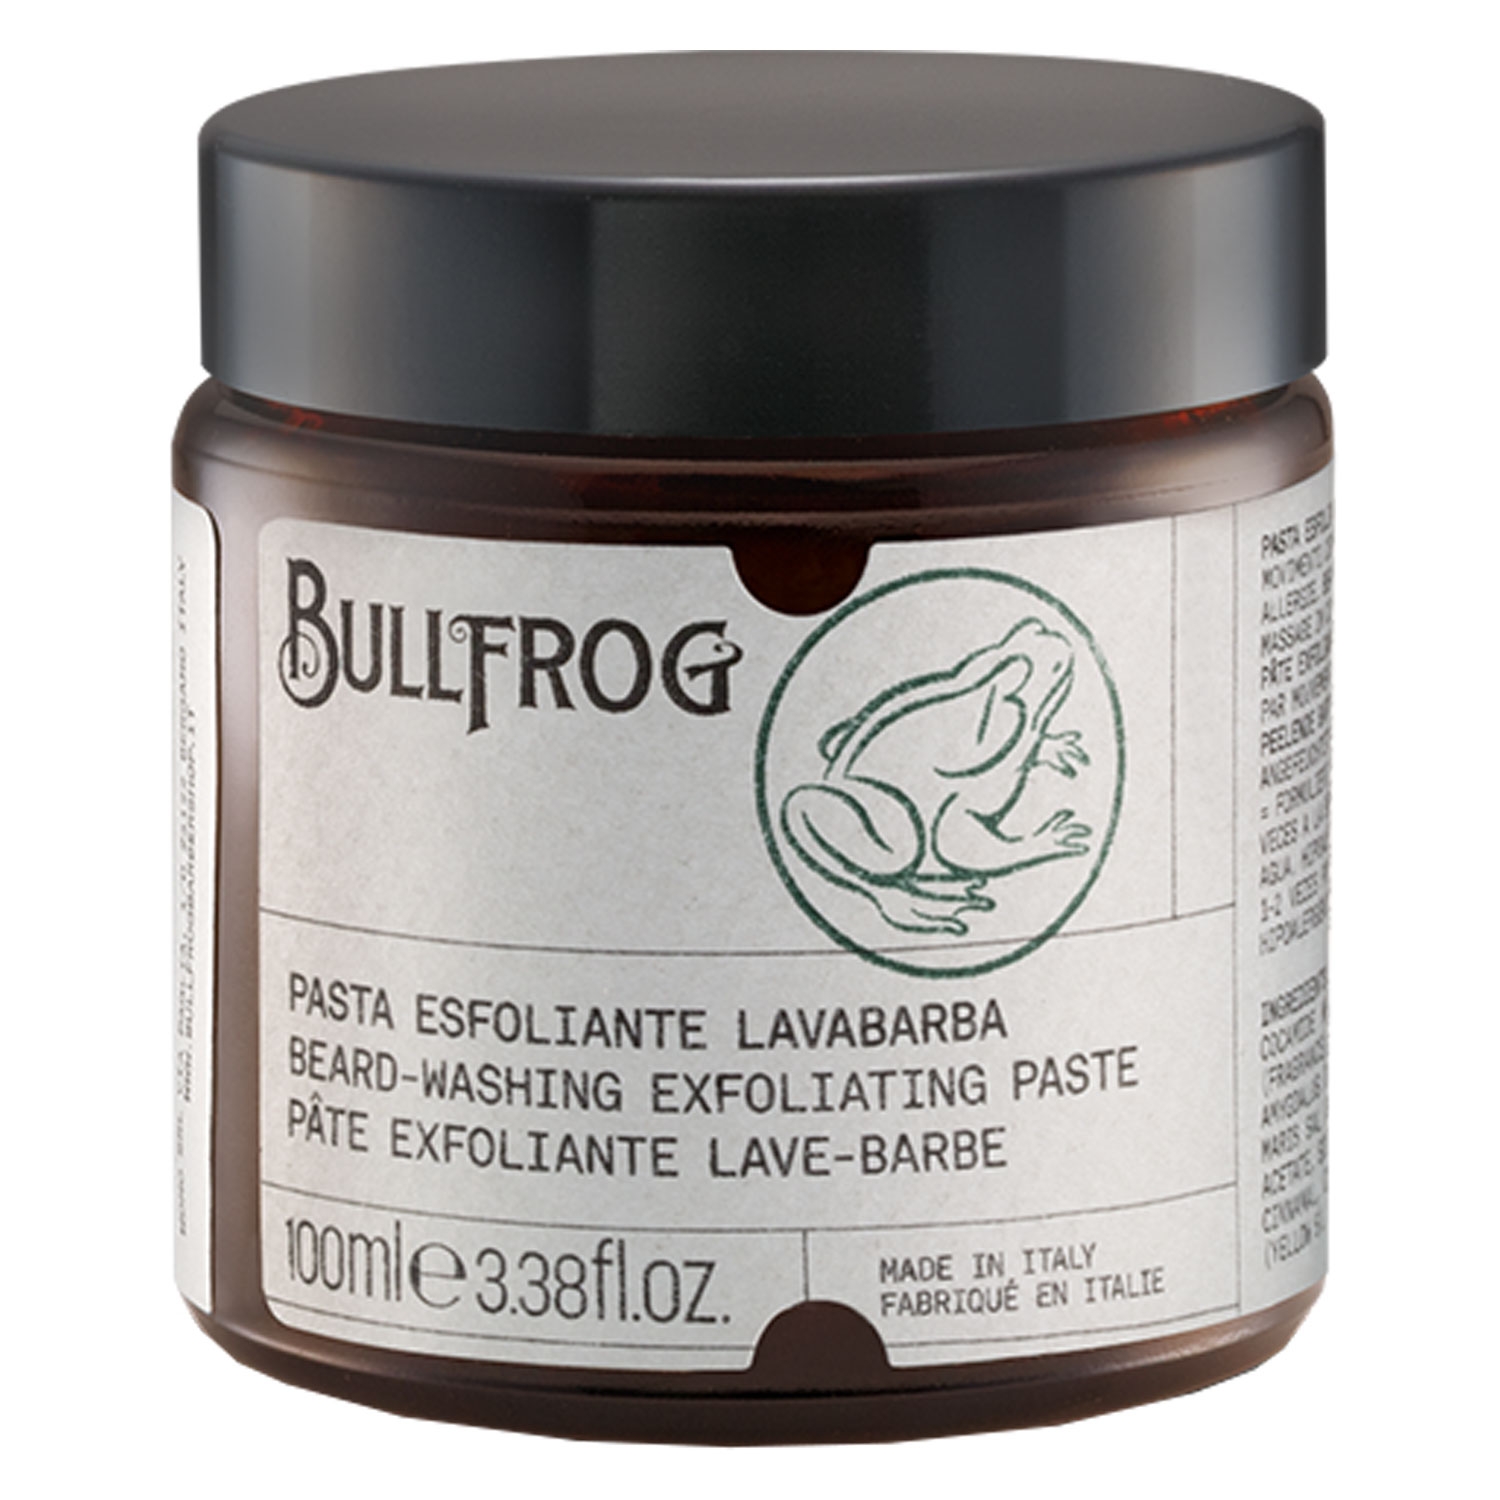 Produktbild von BULLFROG - Beard-Washing Exfoliating Paste